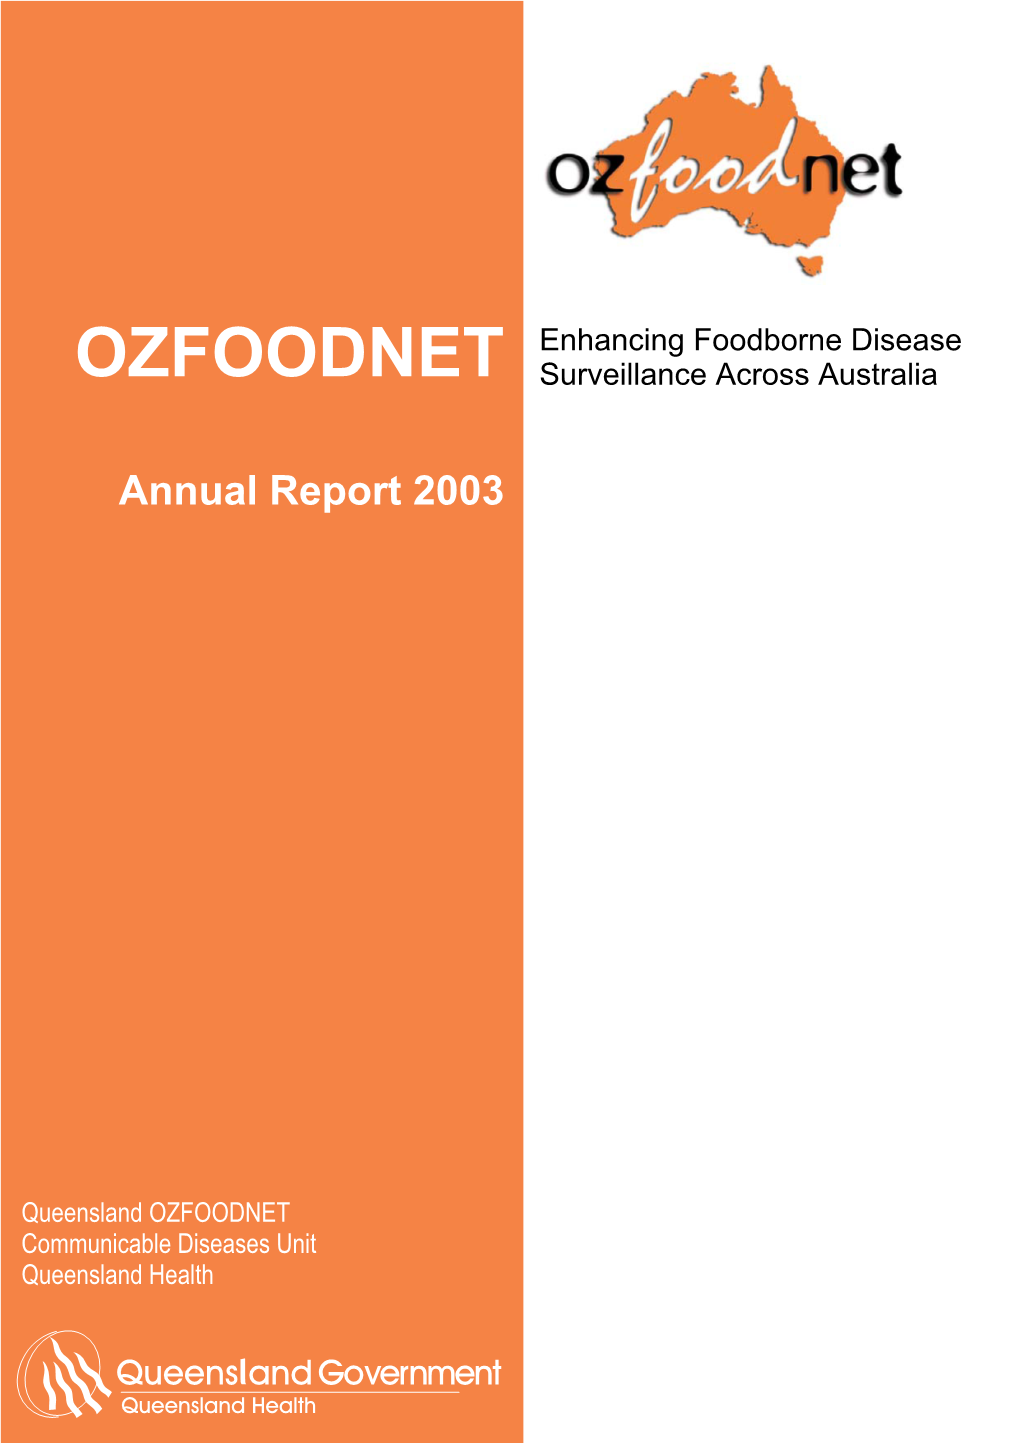 Foodborne Disease OZFOODNET Surveillance Across Australia